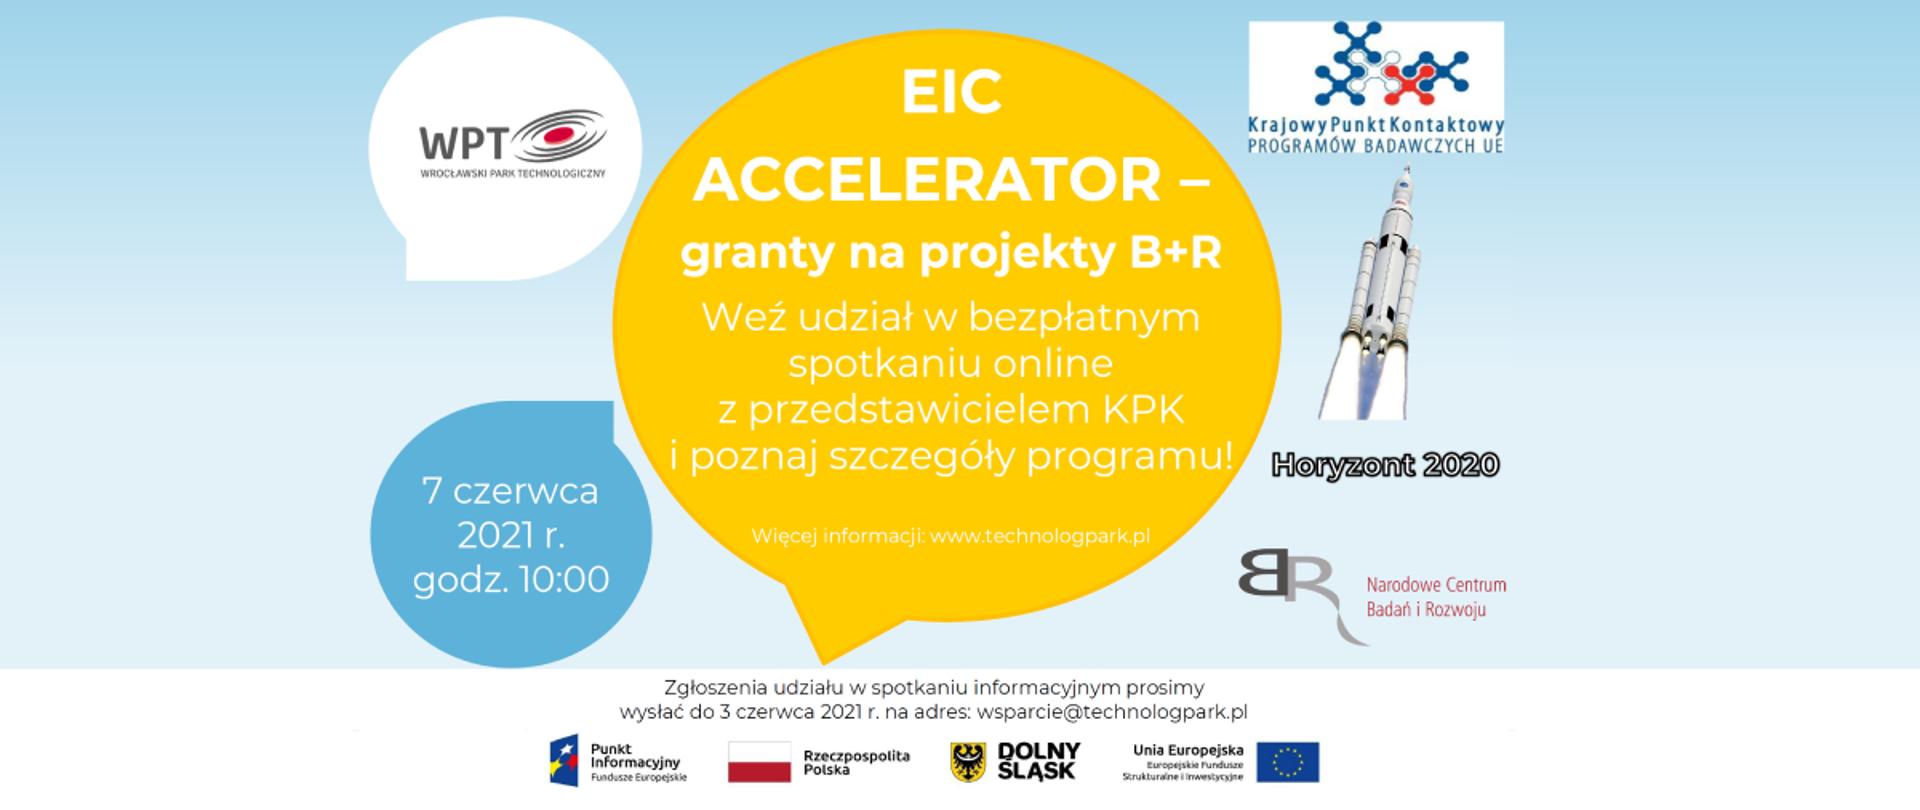 EIC Accelerator: granty na projekty B + R